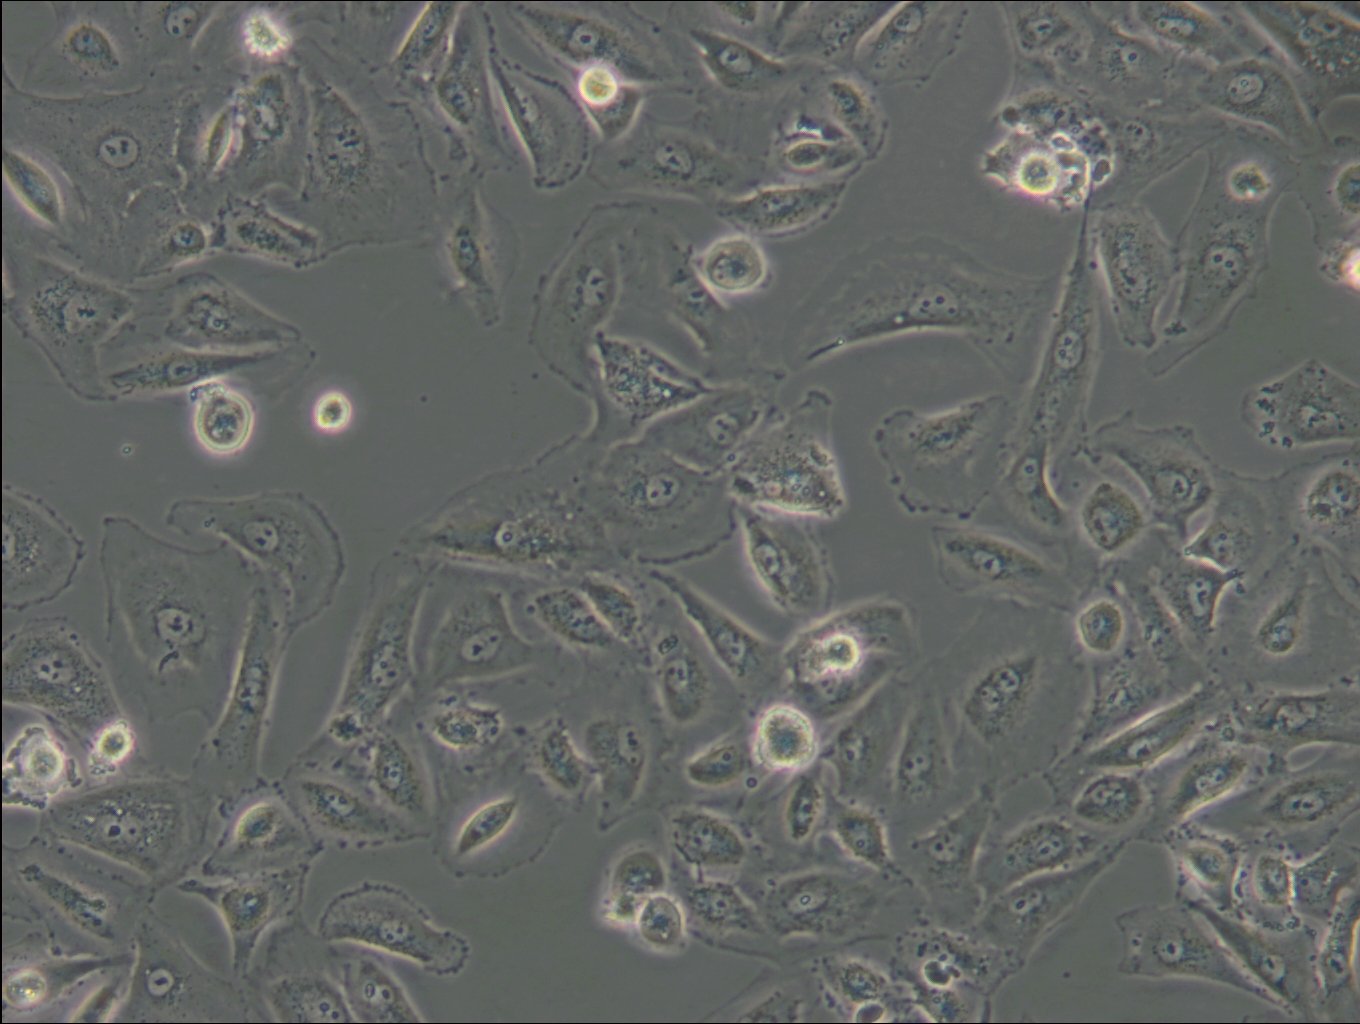 OS-RC-2 Cells